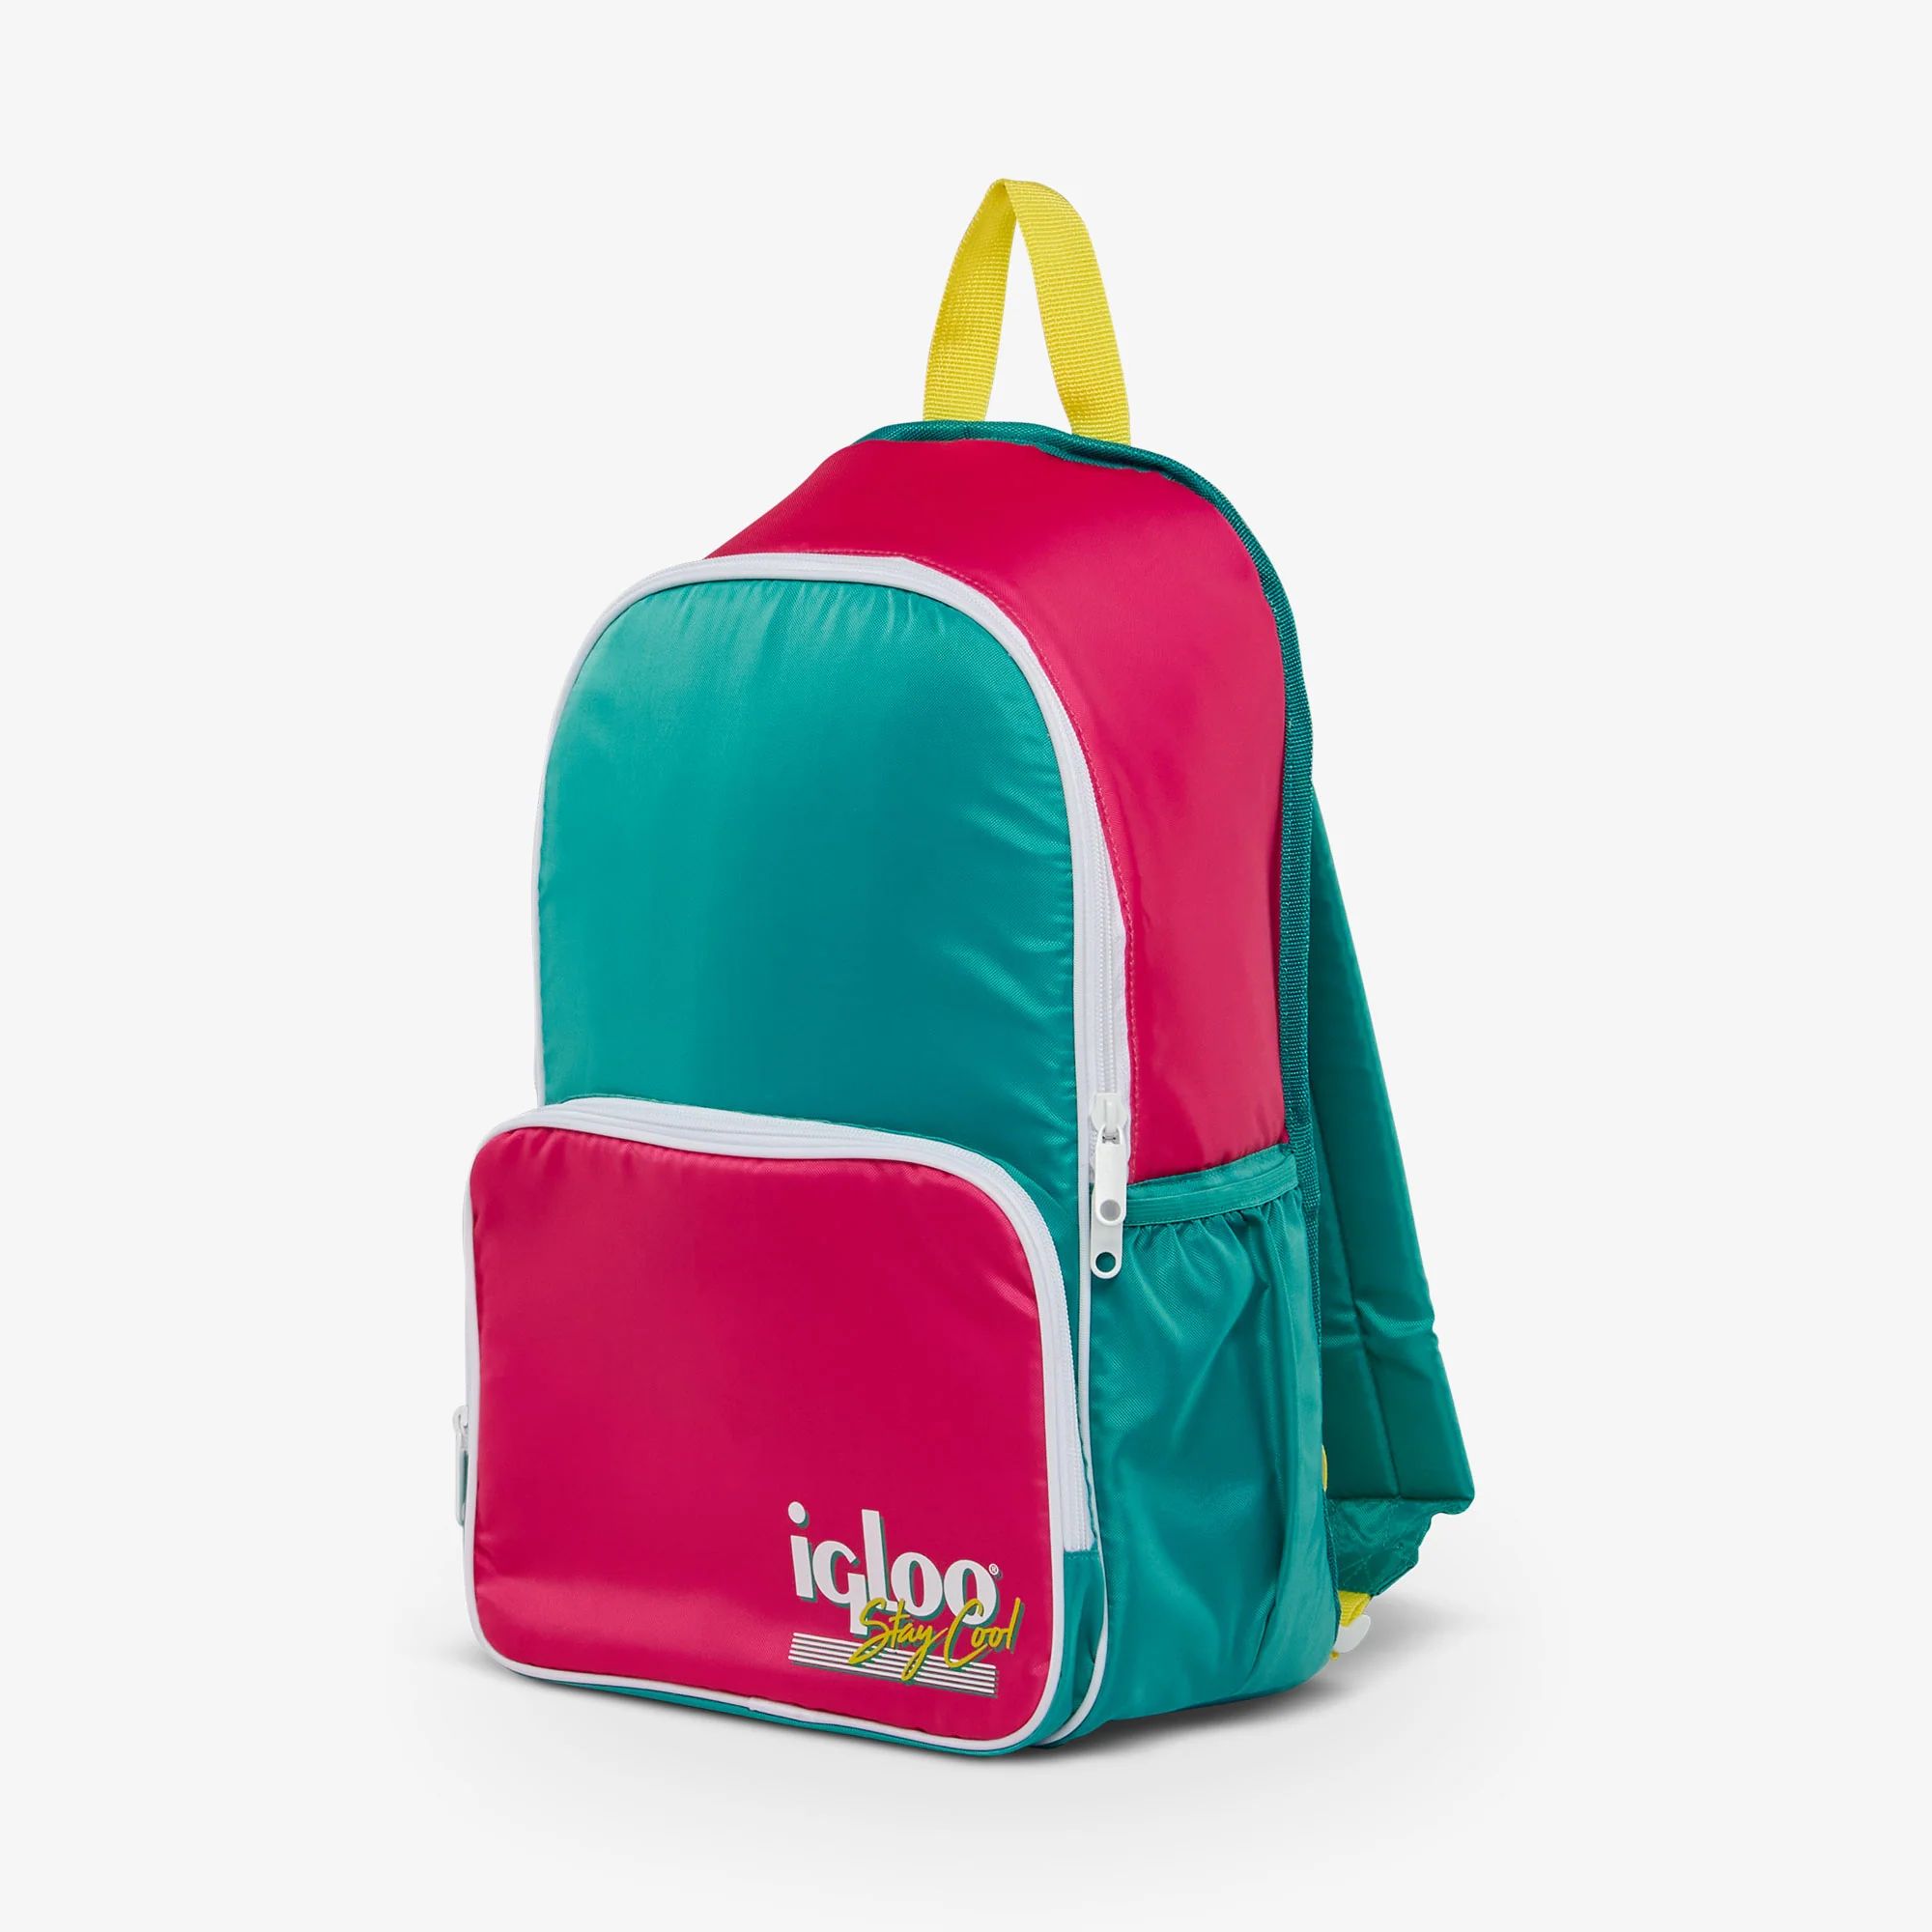 Retro Backpack Cooler | Igloo Coolers